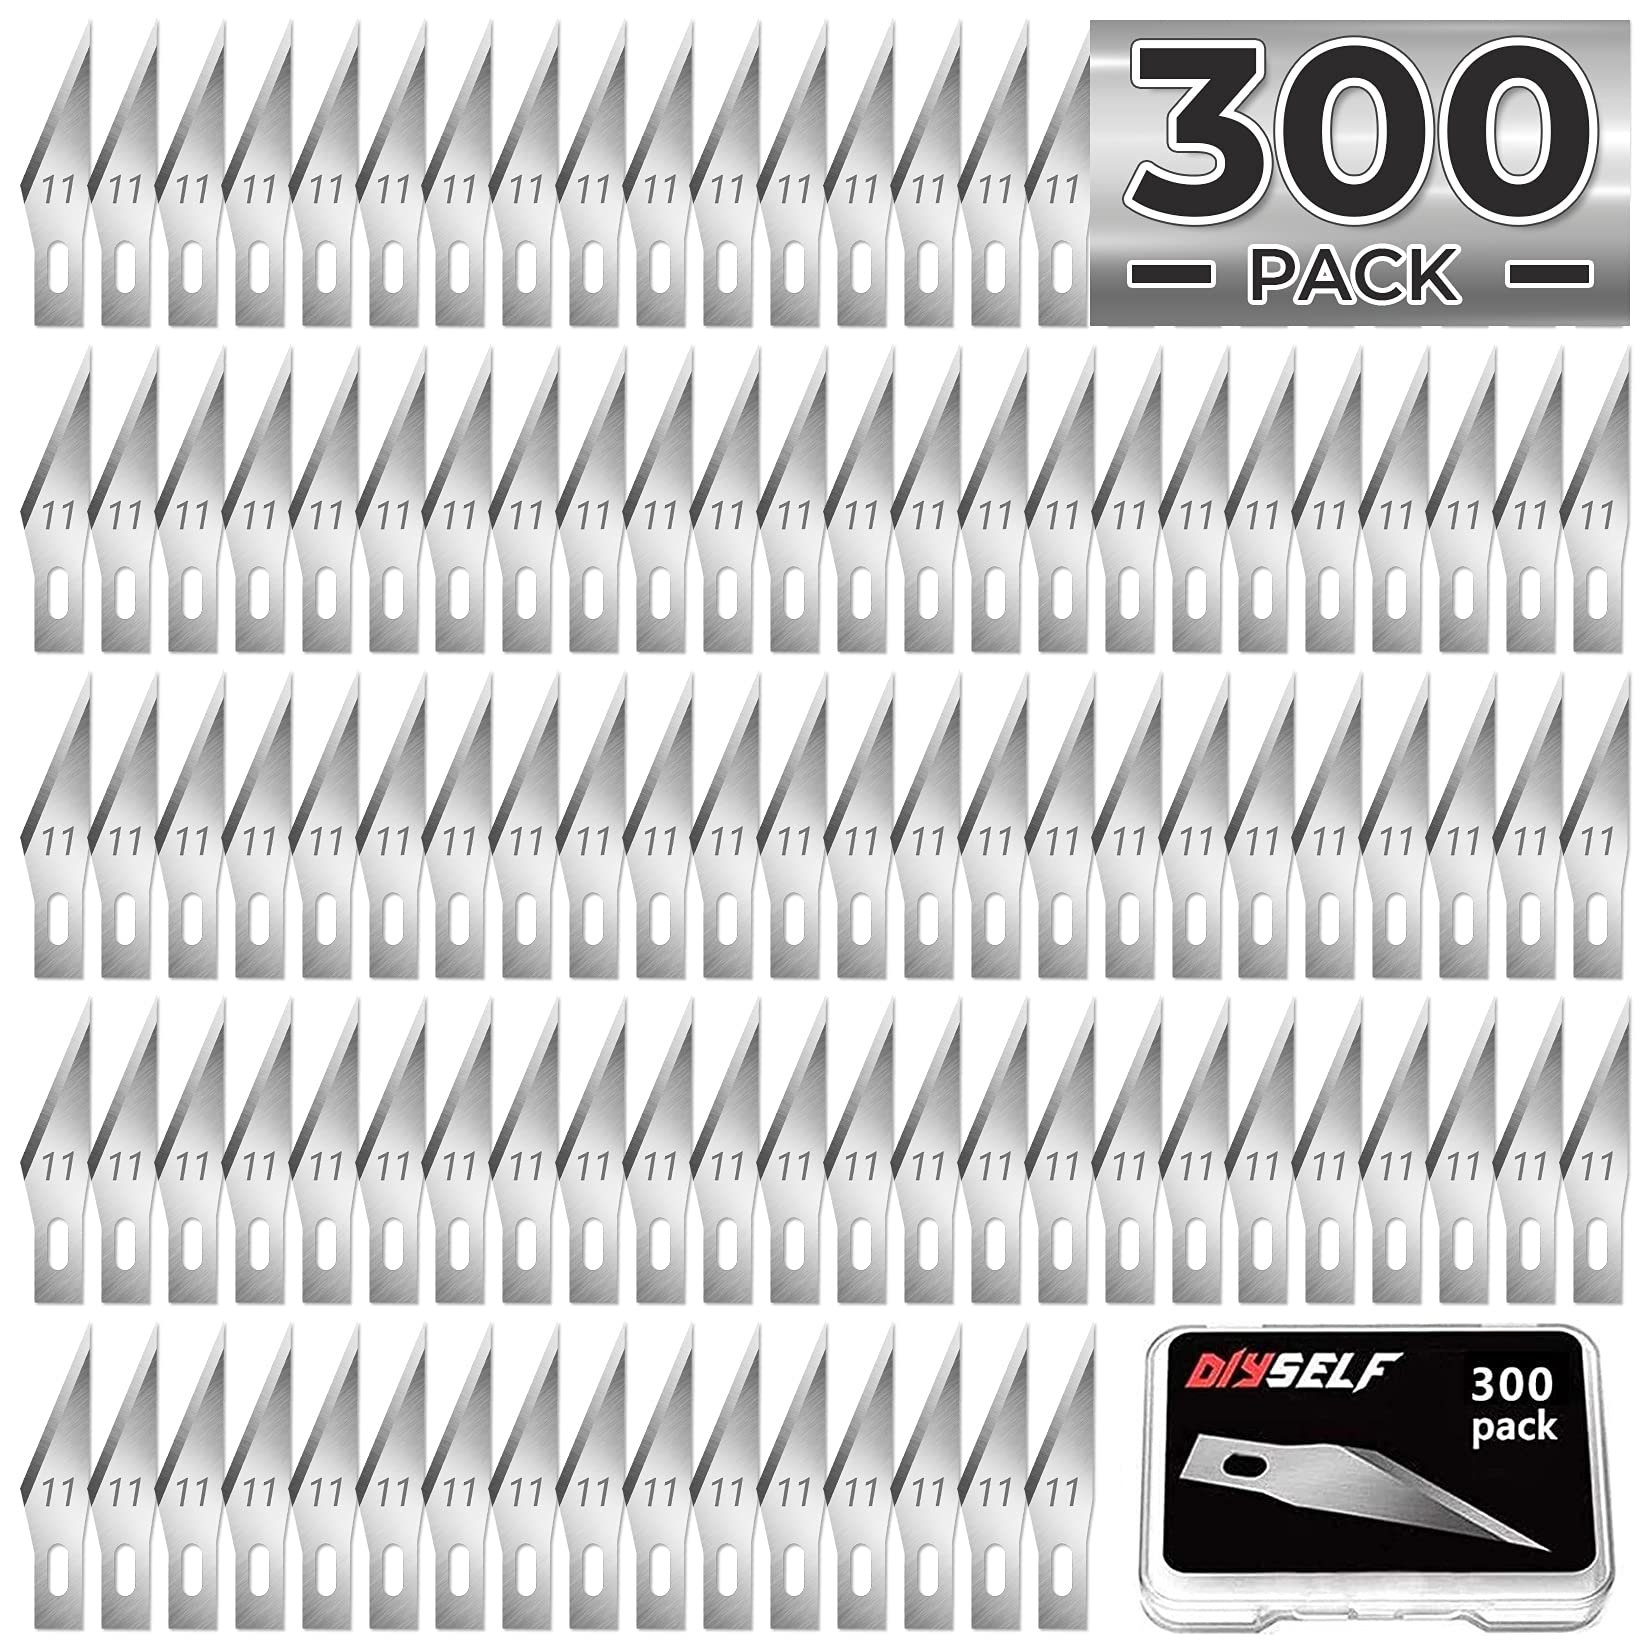 DIYSELF 300 PCS Exacto Knife Blades 11, High Carbon Steel Exacto